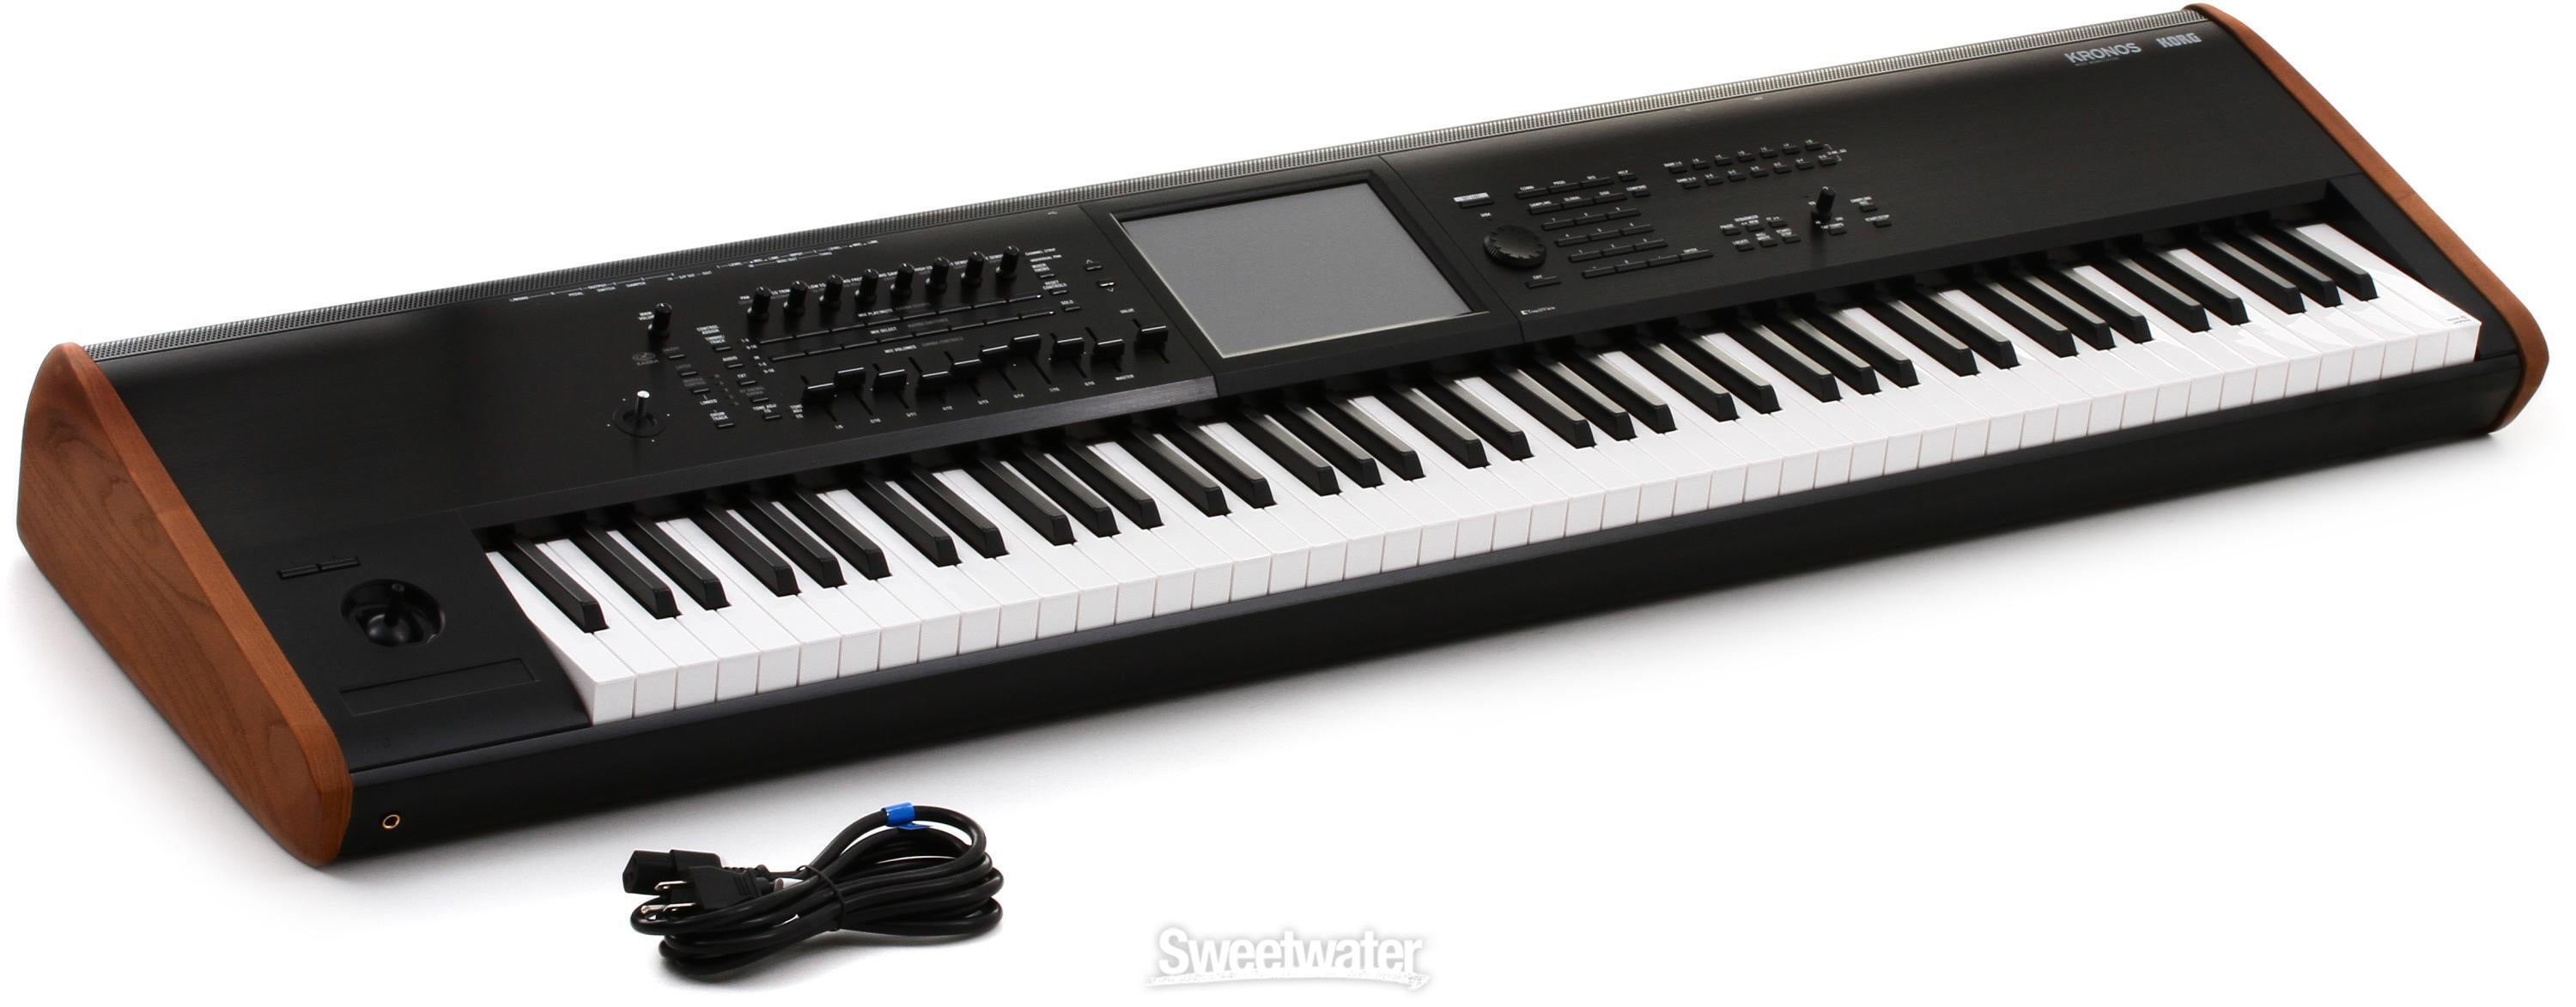 Korg Kronos 88-key Synthesizer Workstation Reviews | Sweetwater